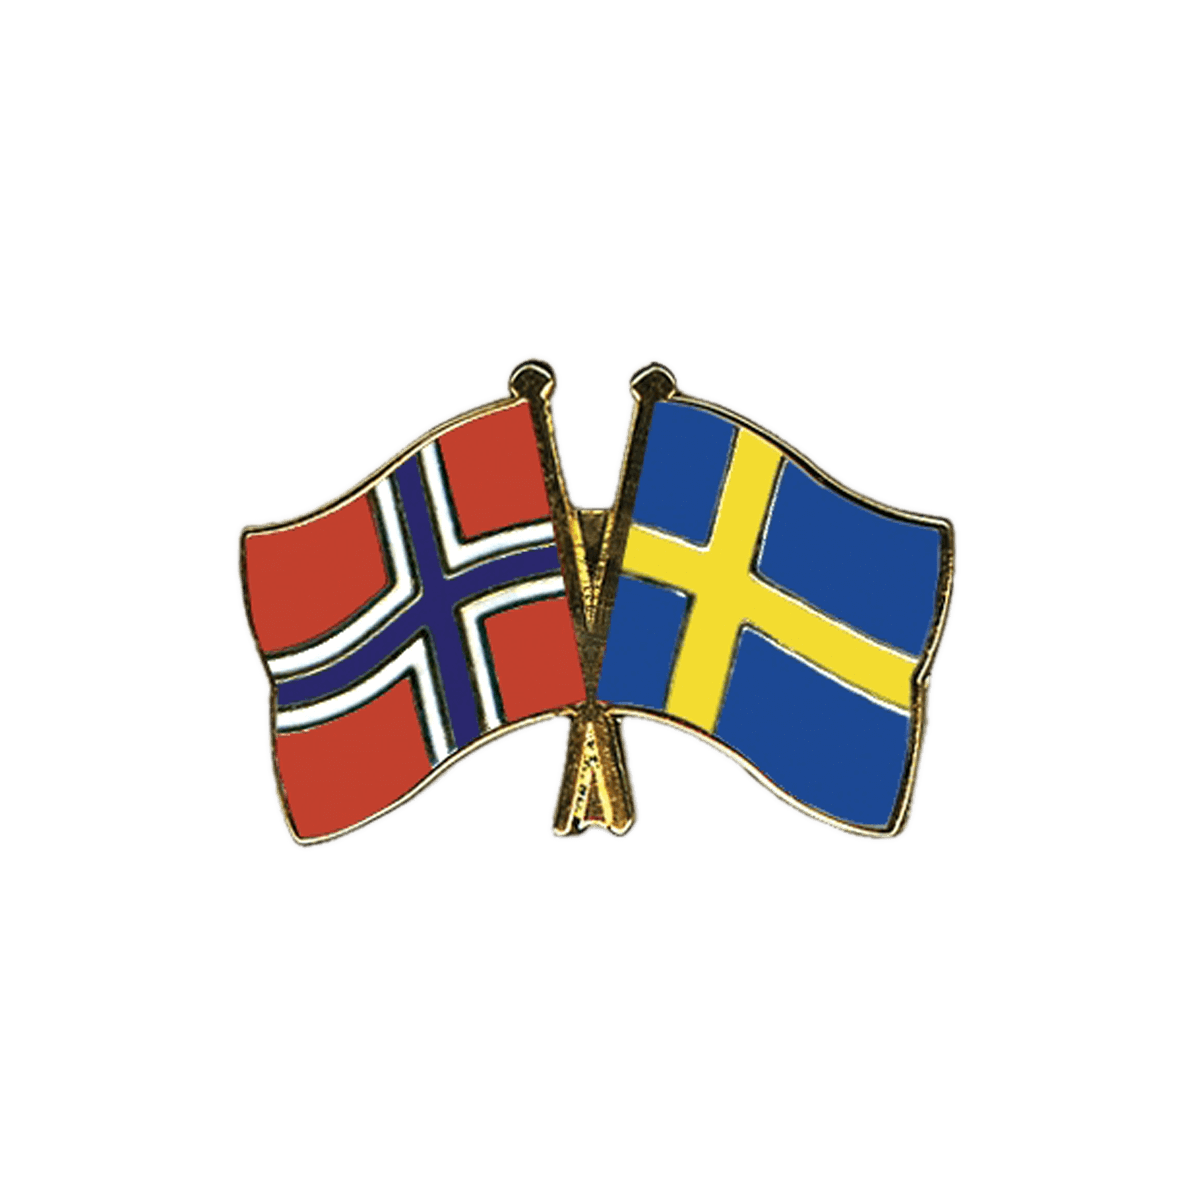 vennskapspin norge sverige norway sweden pin